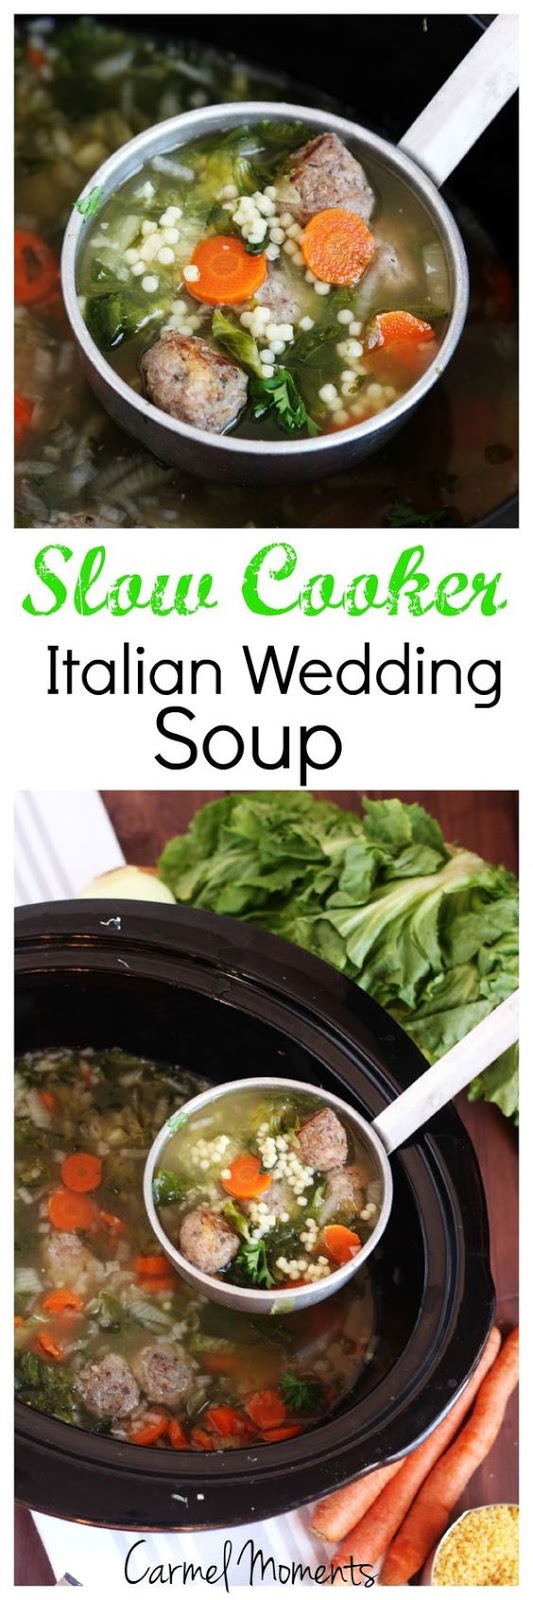 SLOW COOKER ITALIAN WEDDING SOUP RECIPE